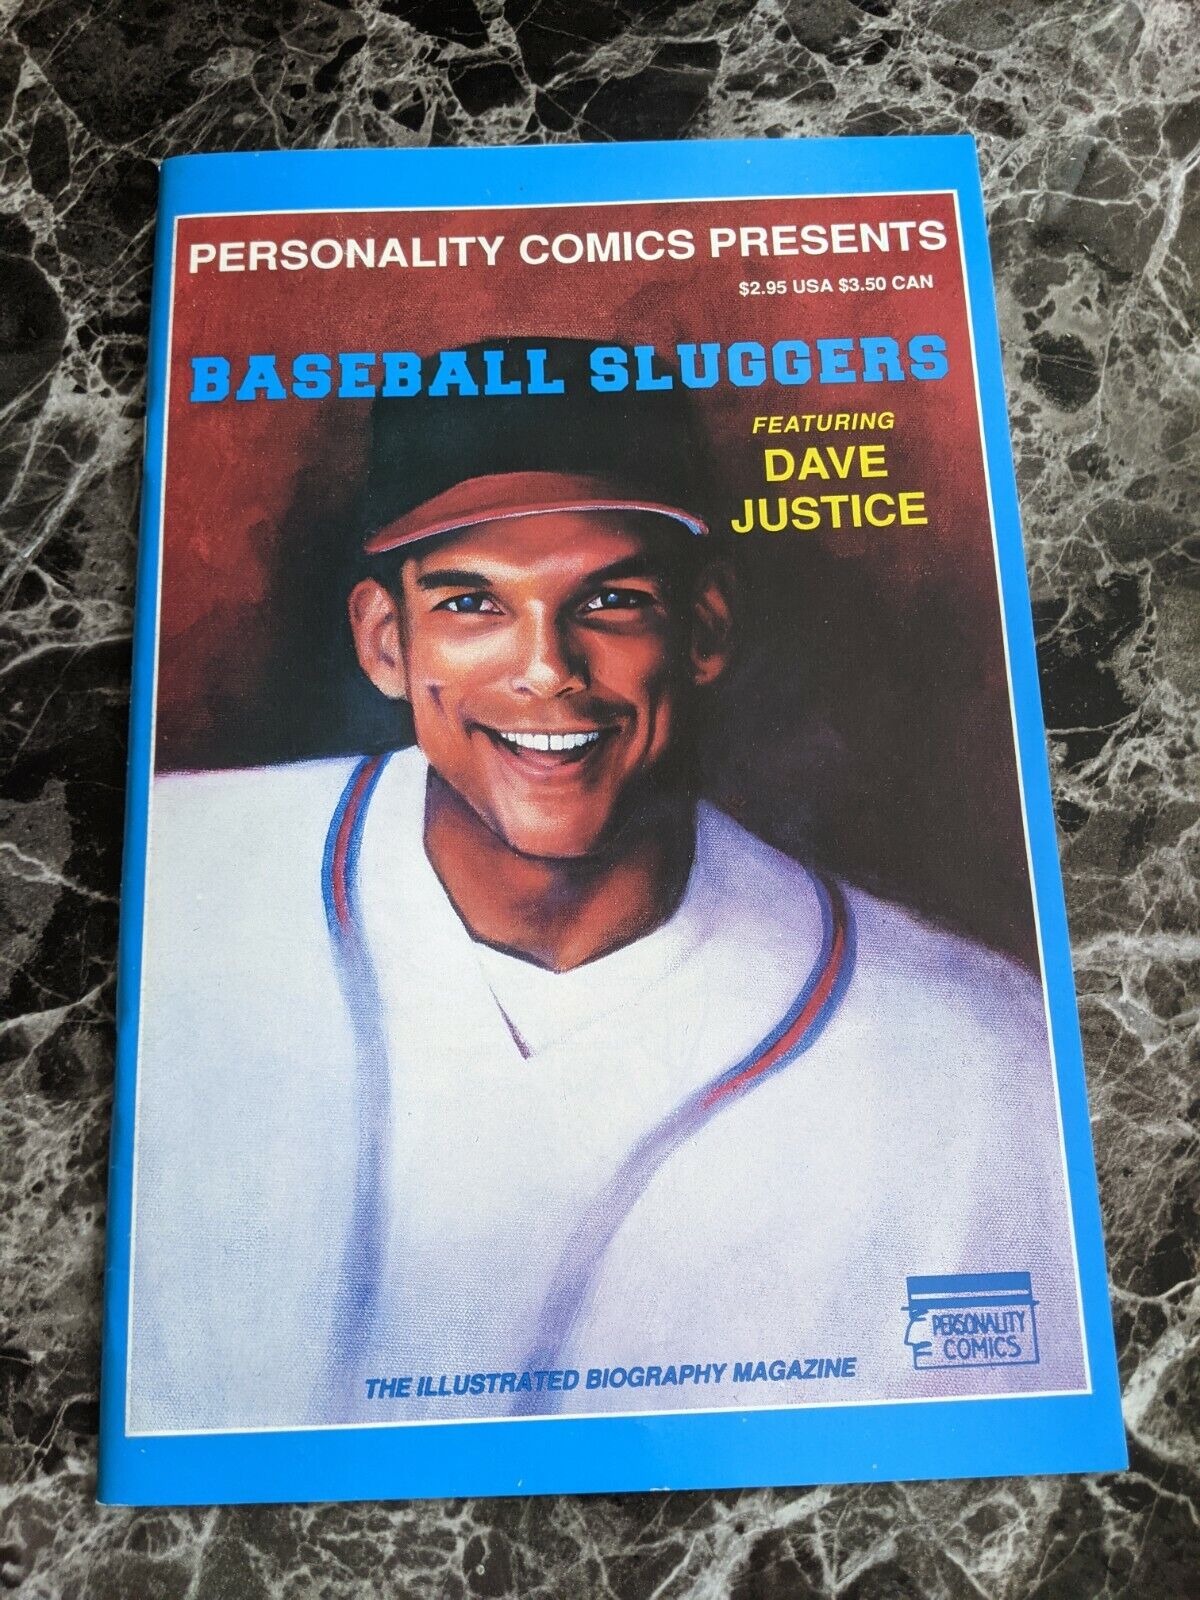 Personality Comics Presents DAVID JUSTICE #1 1992 Personality Comics SLUGGERS